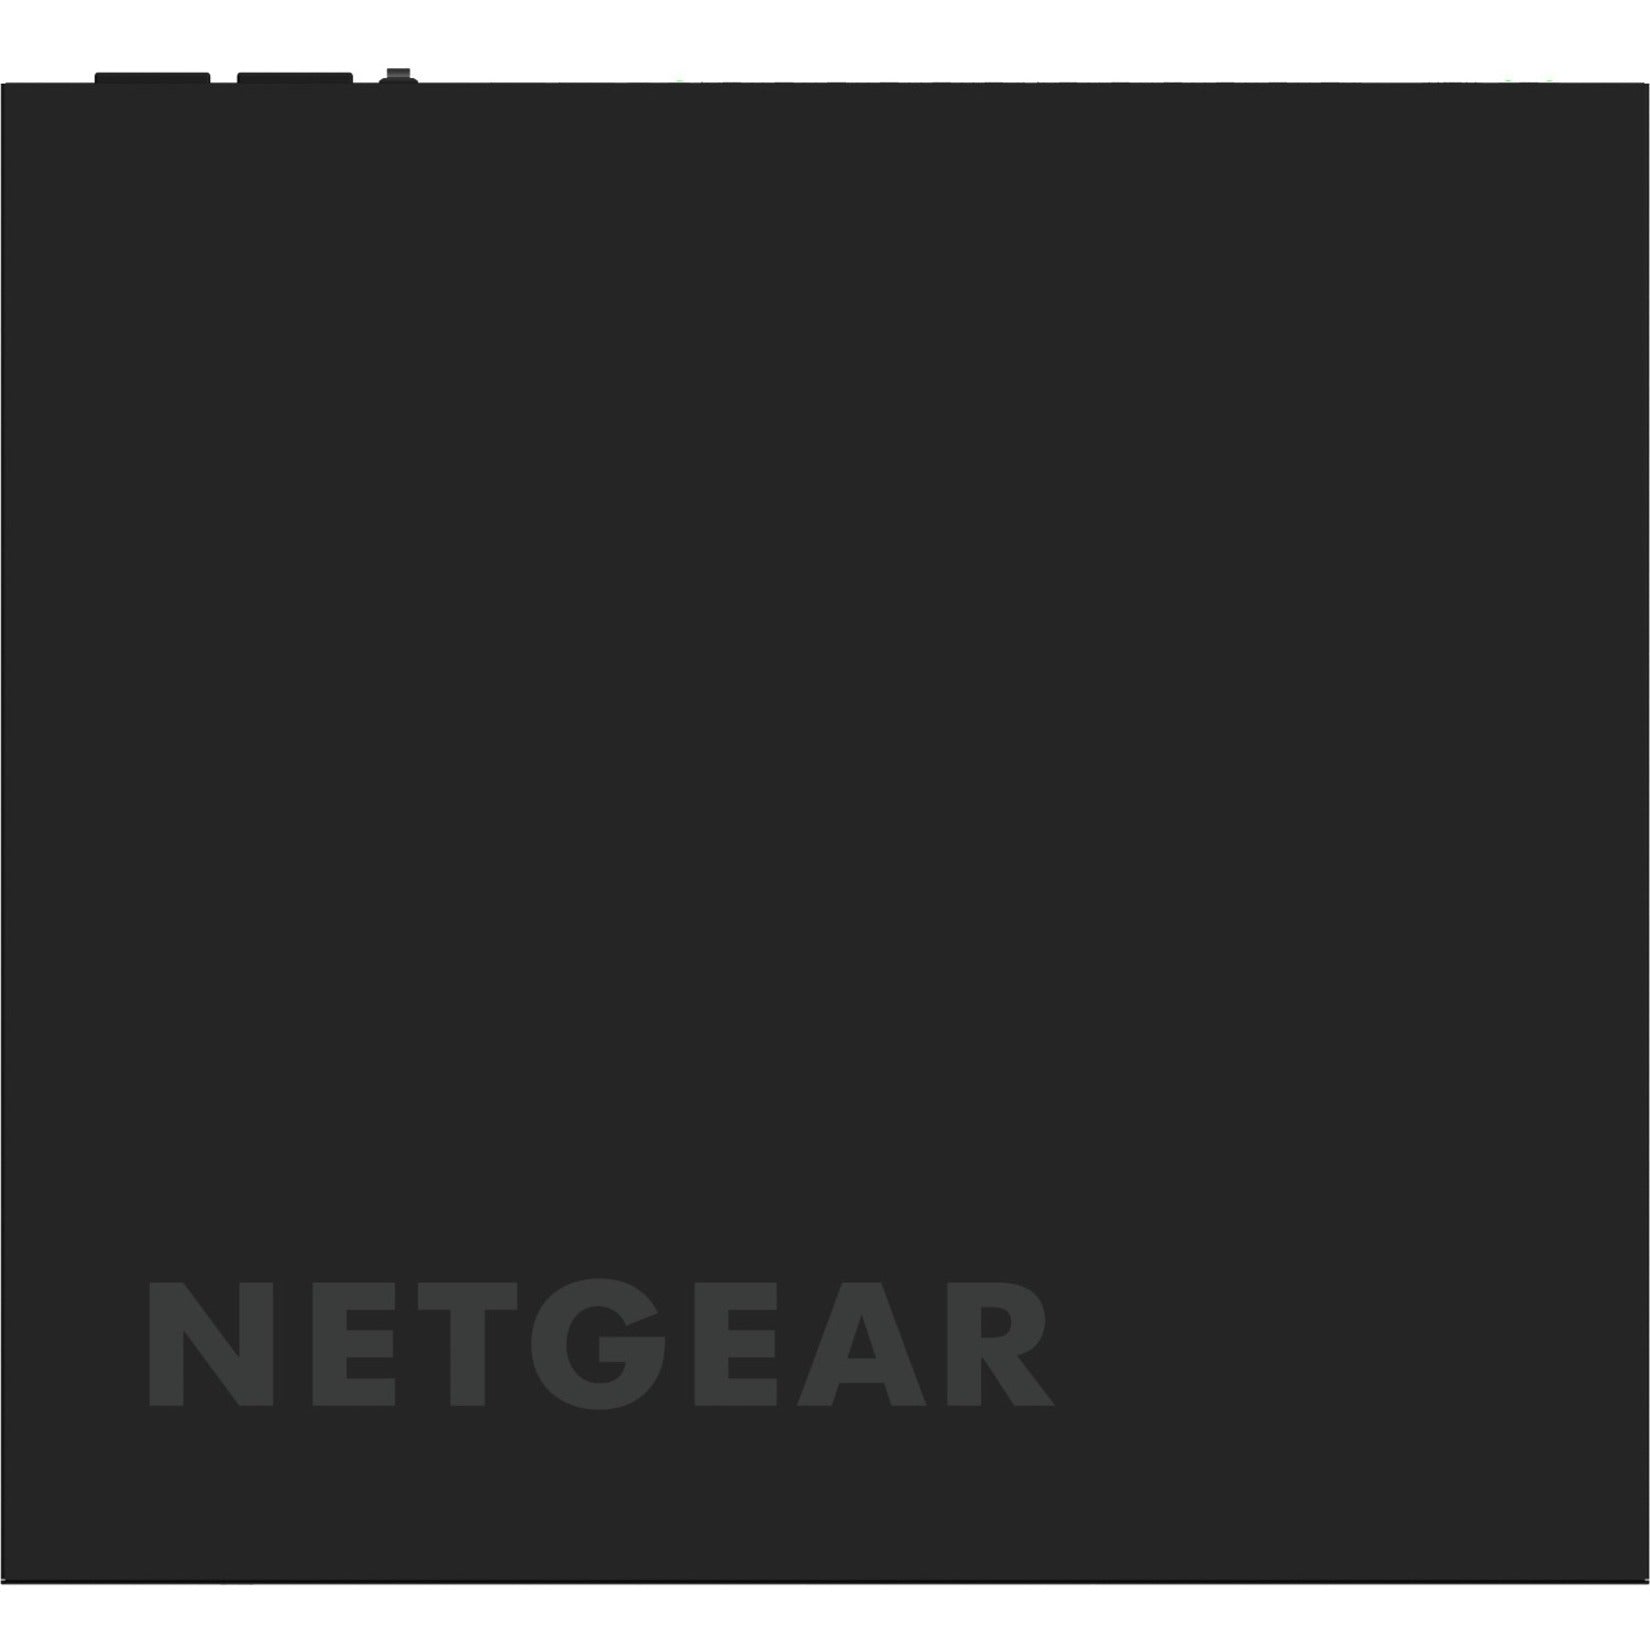 Netgear GSM4230UP-100NAS M4250-26G4F-PoE++ AV Line Managed Switch, 24 Port Gigabit Ethernet with 4 SFP Slots, 1440W PoE Budget